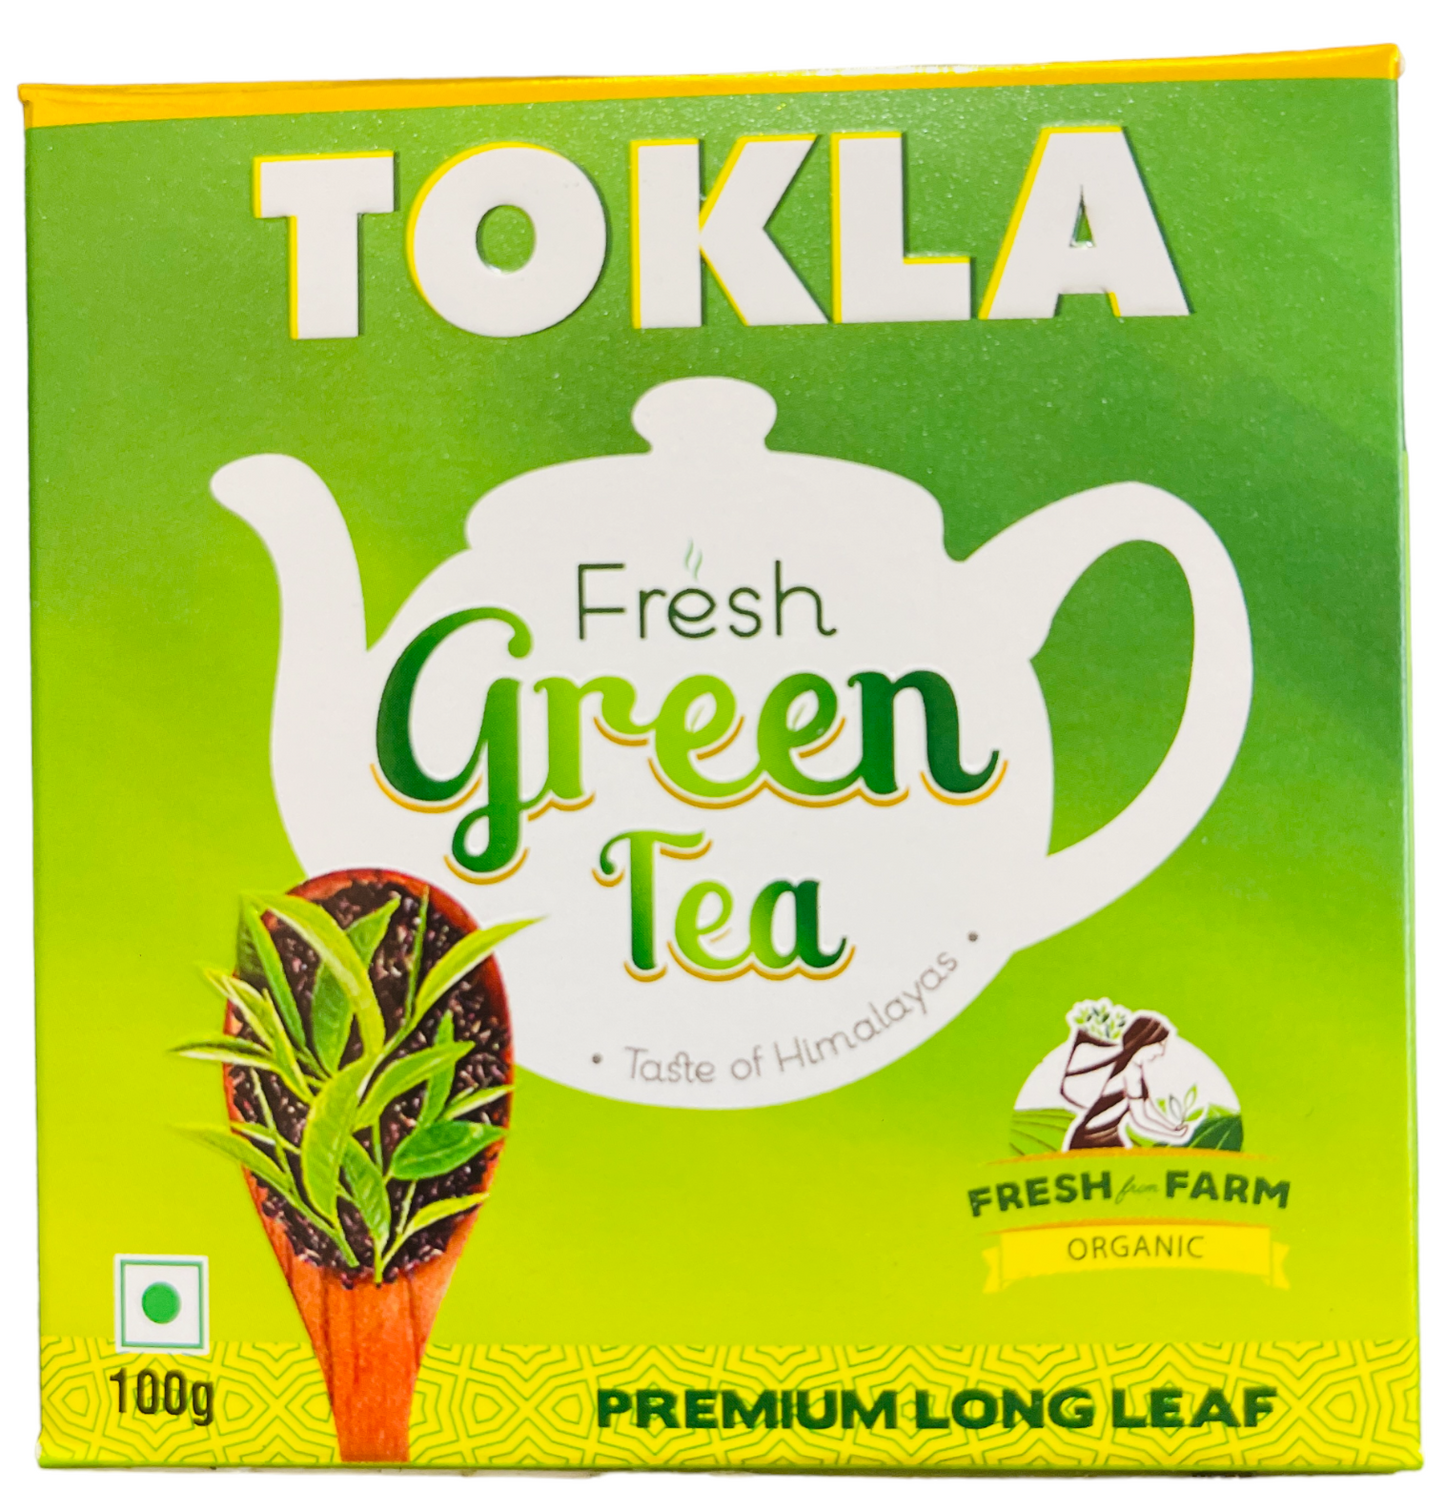 Tokla Green Tea, 100 gms